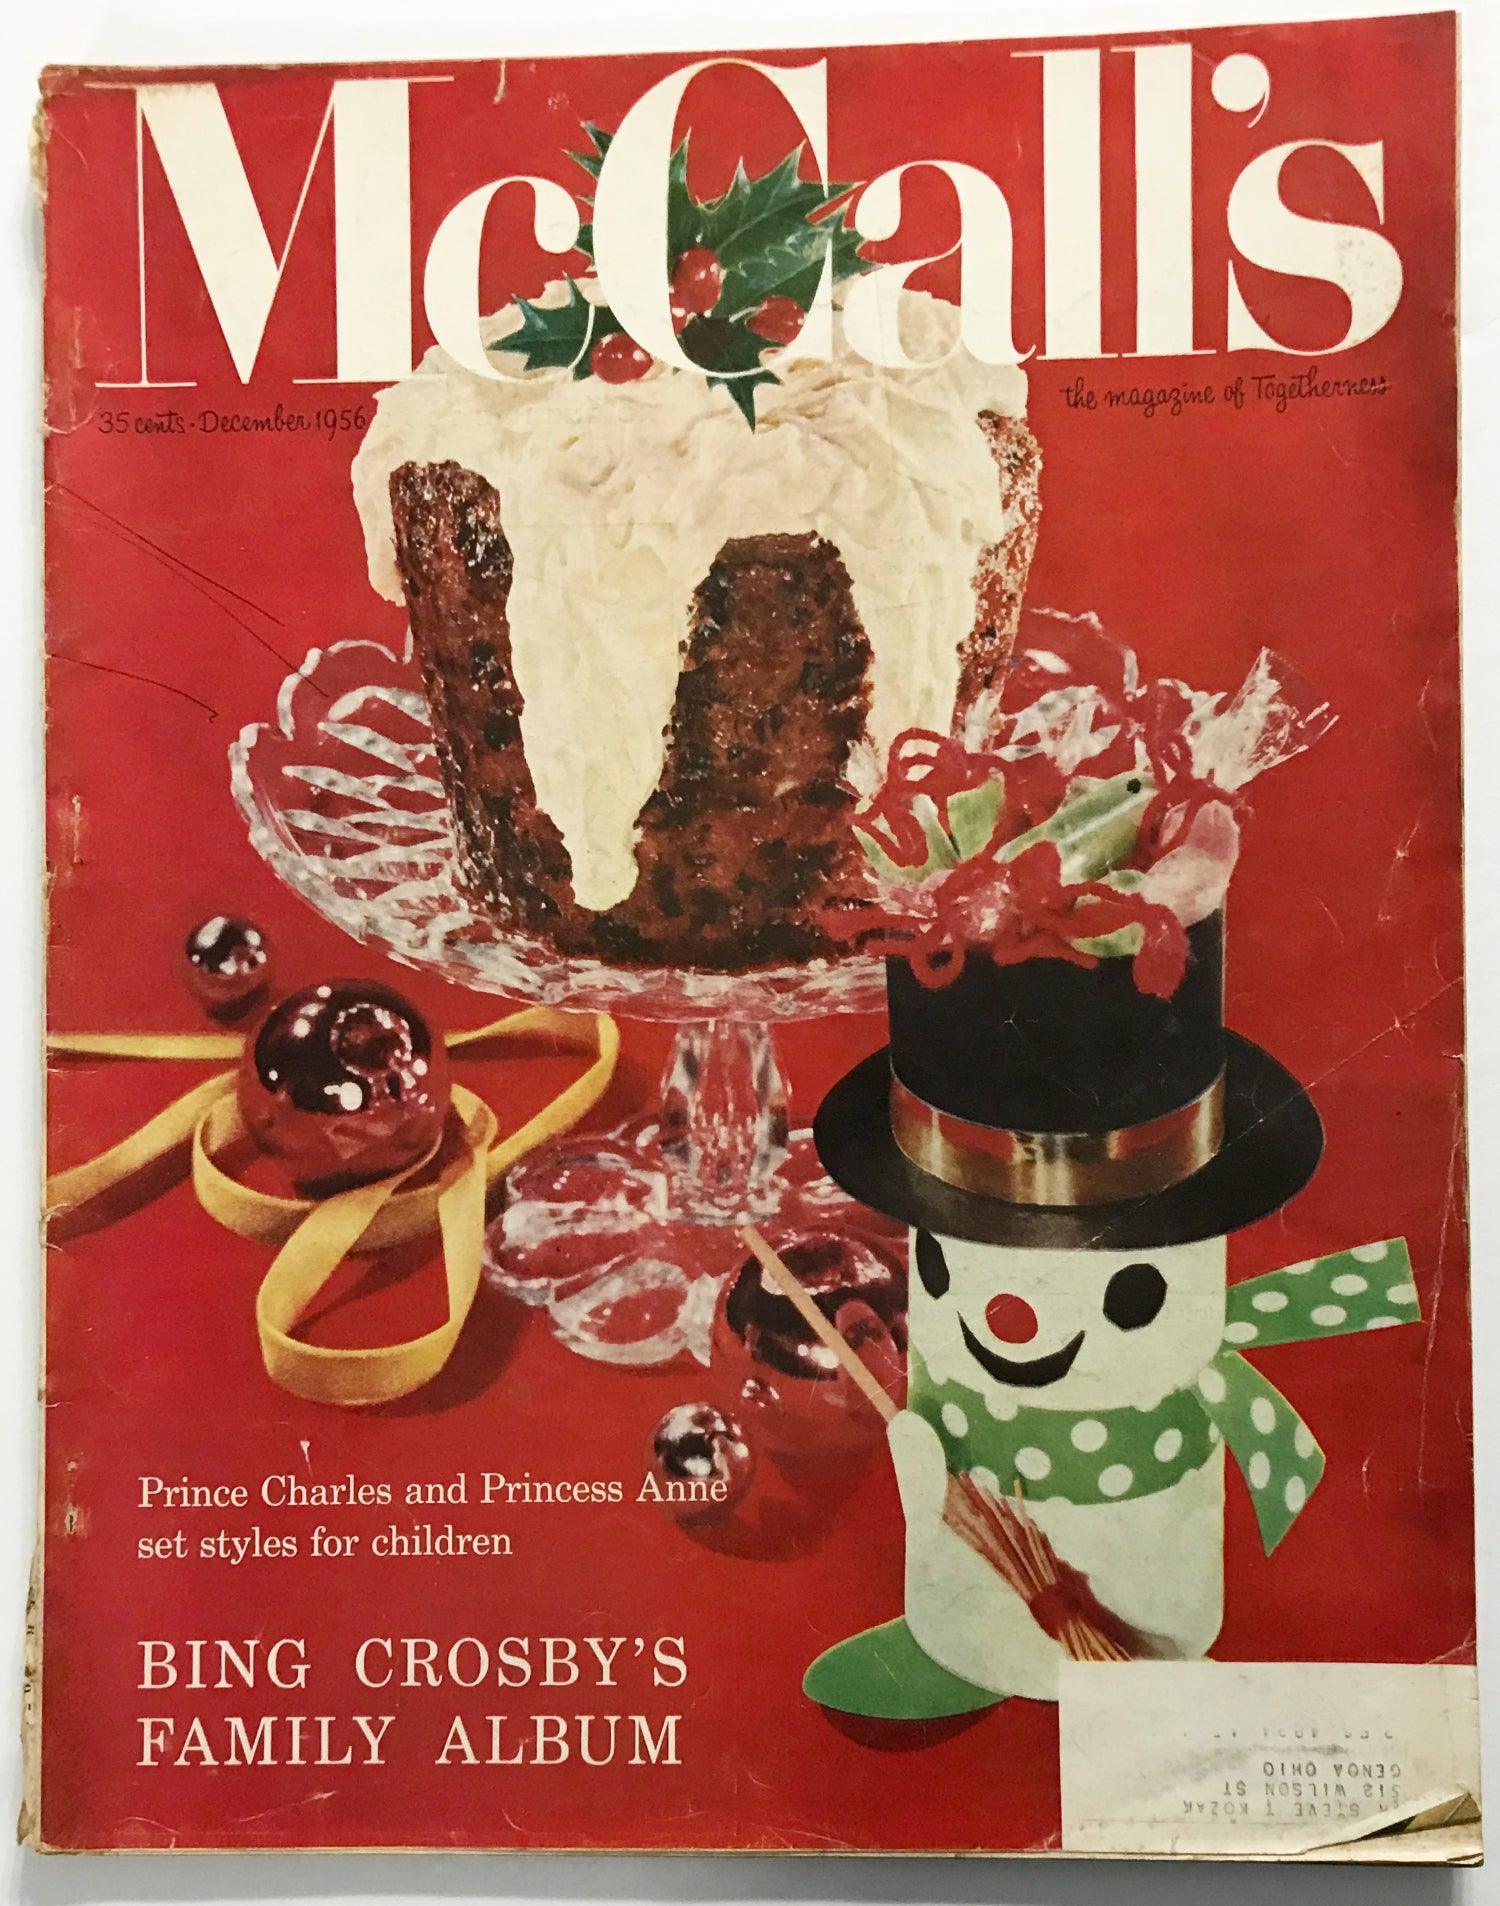 McCall's Magazine December 1956 - Lamoree’s Vintage